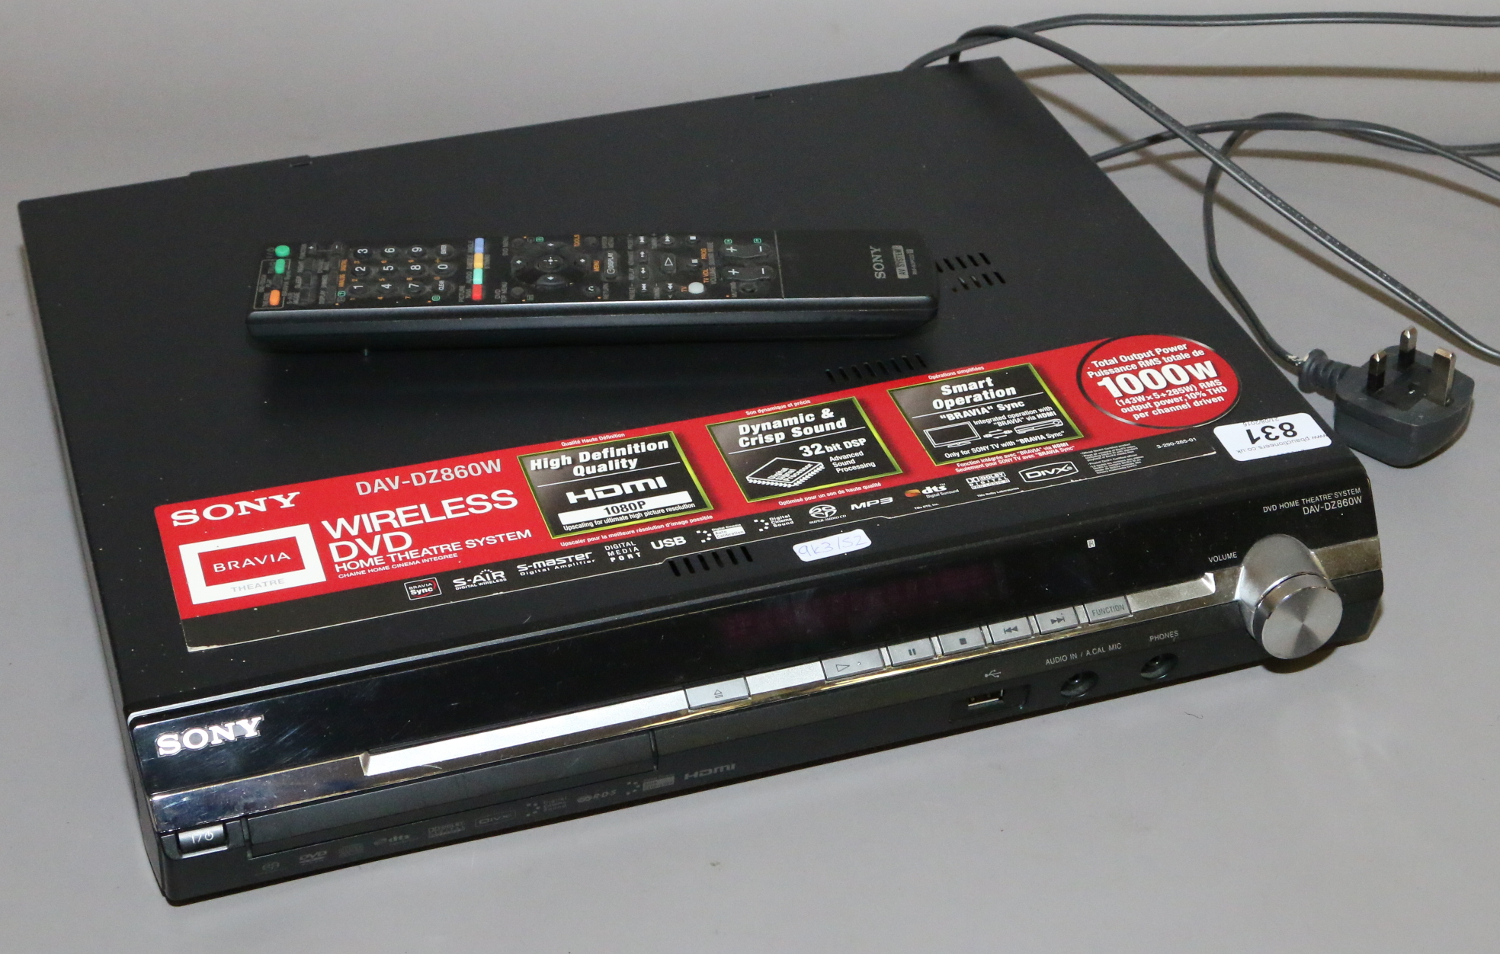 A Sony DAV-DZ860W wireless DVD home theatre system with remote control